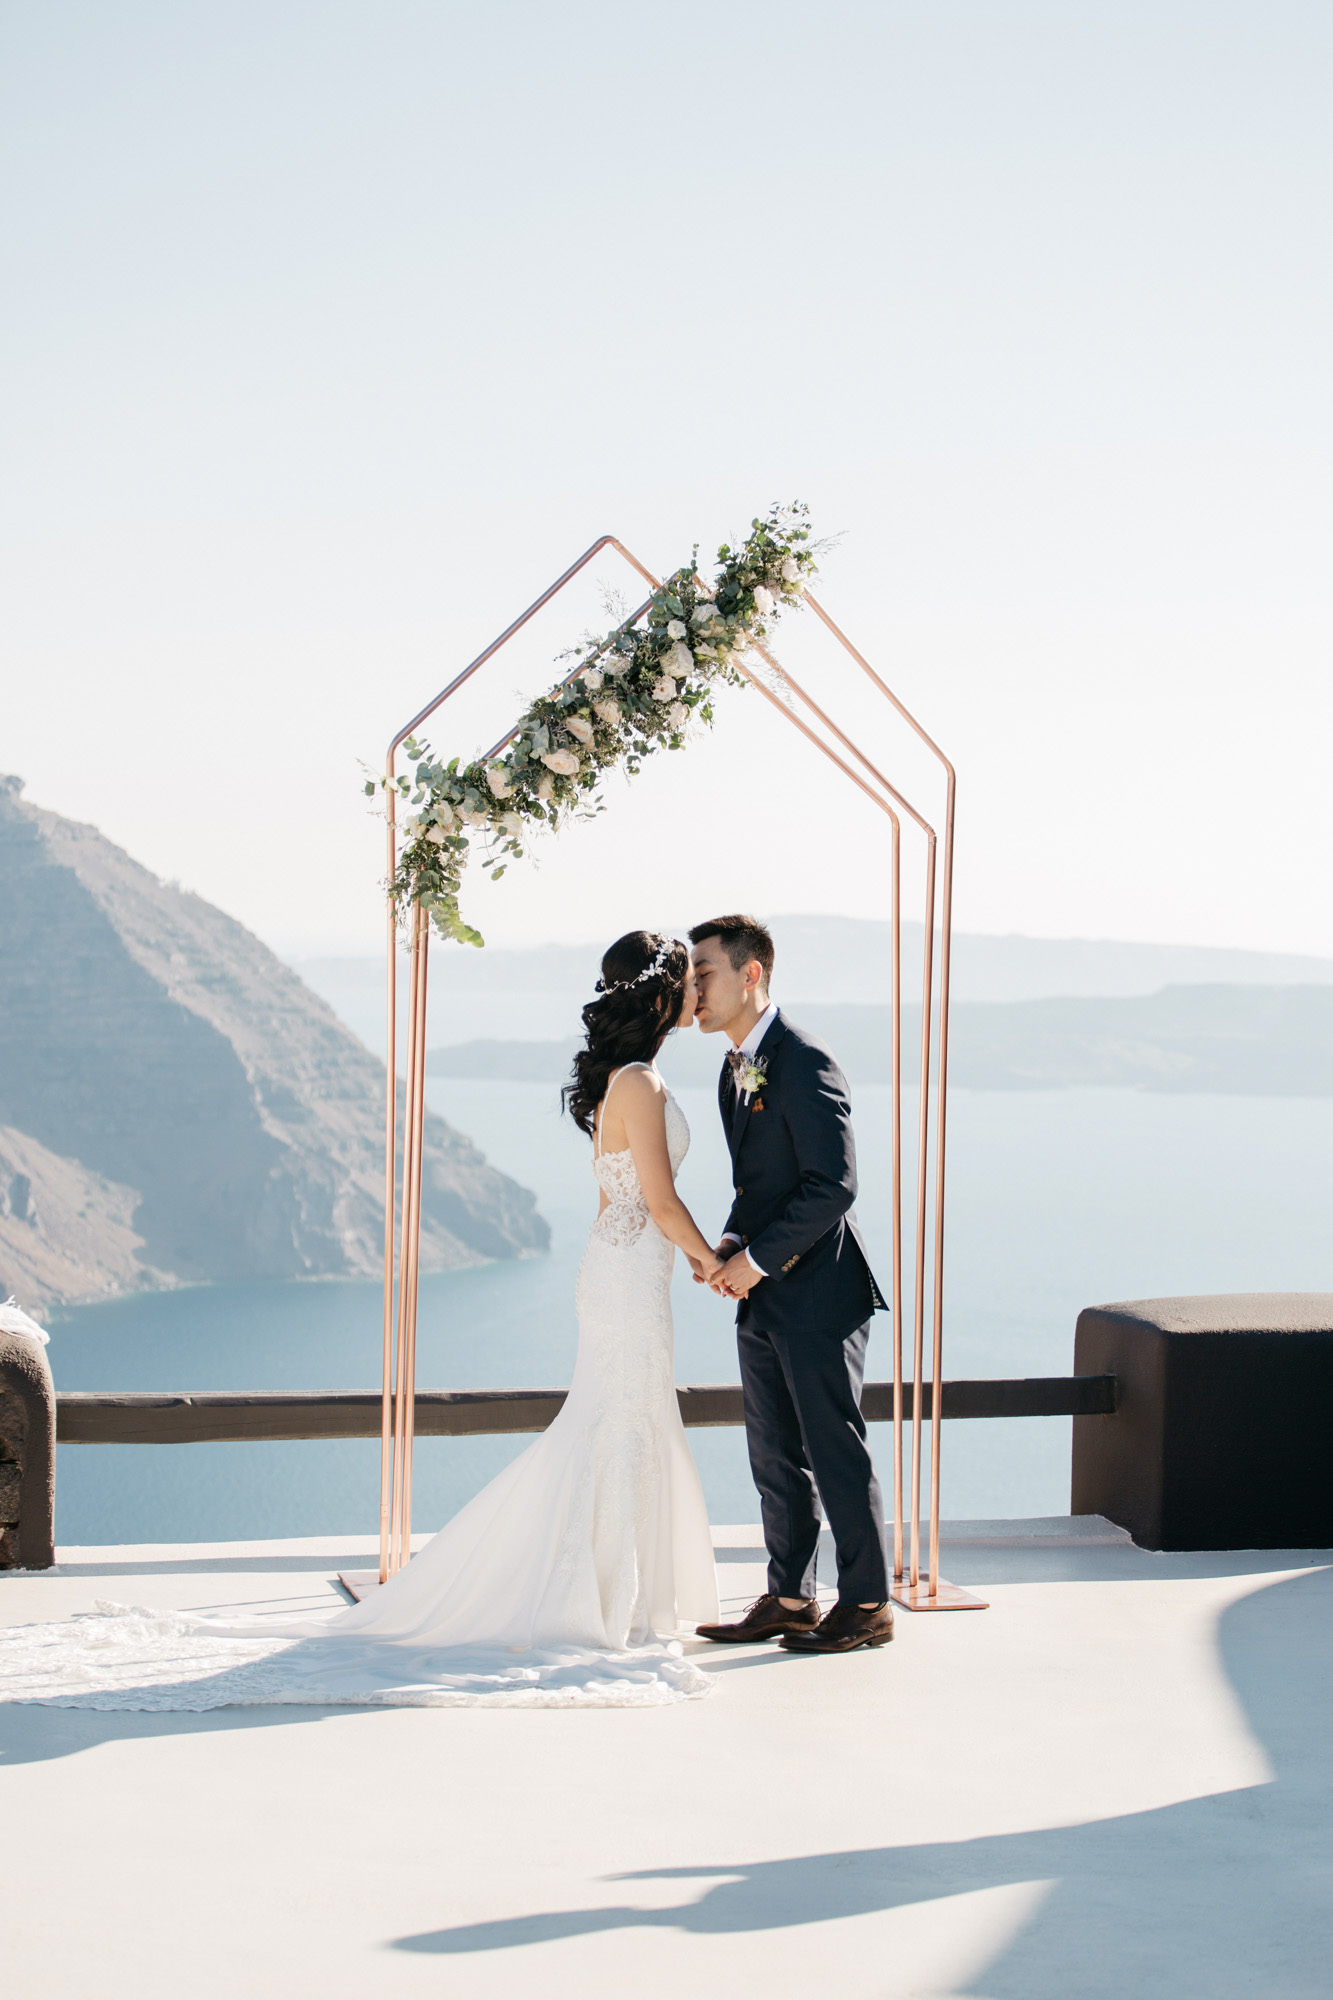 Destination wedding ceremony in Aenaon Villas in Oia Santorini Greece.